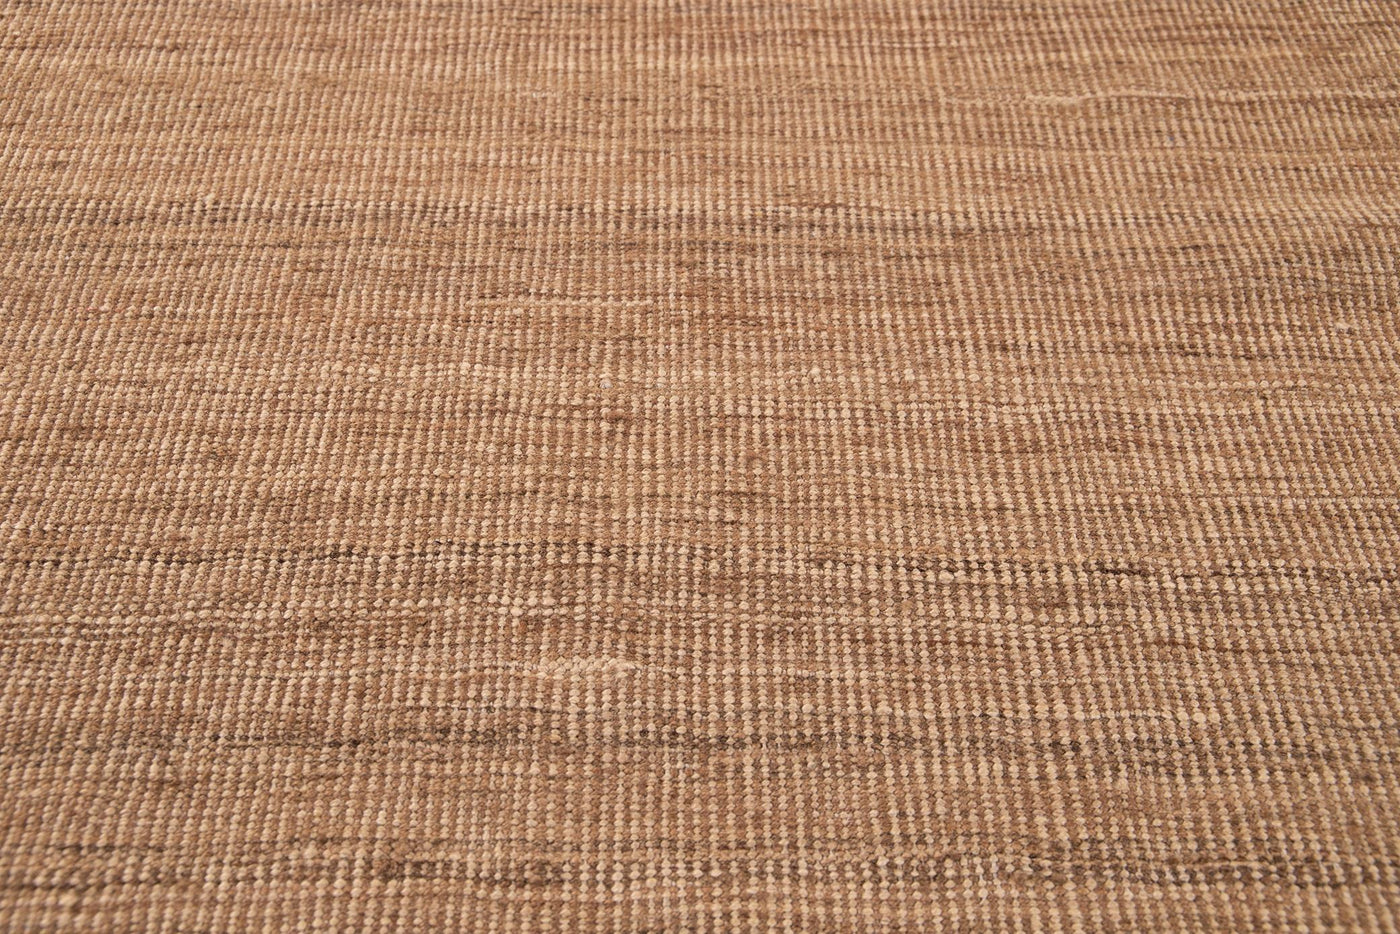 Contemporary Flatweave Kilim Wool Rug 8 X 12